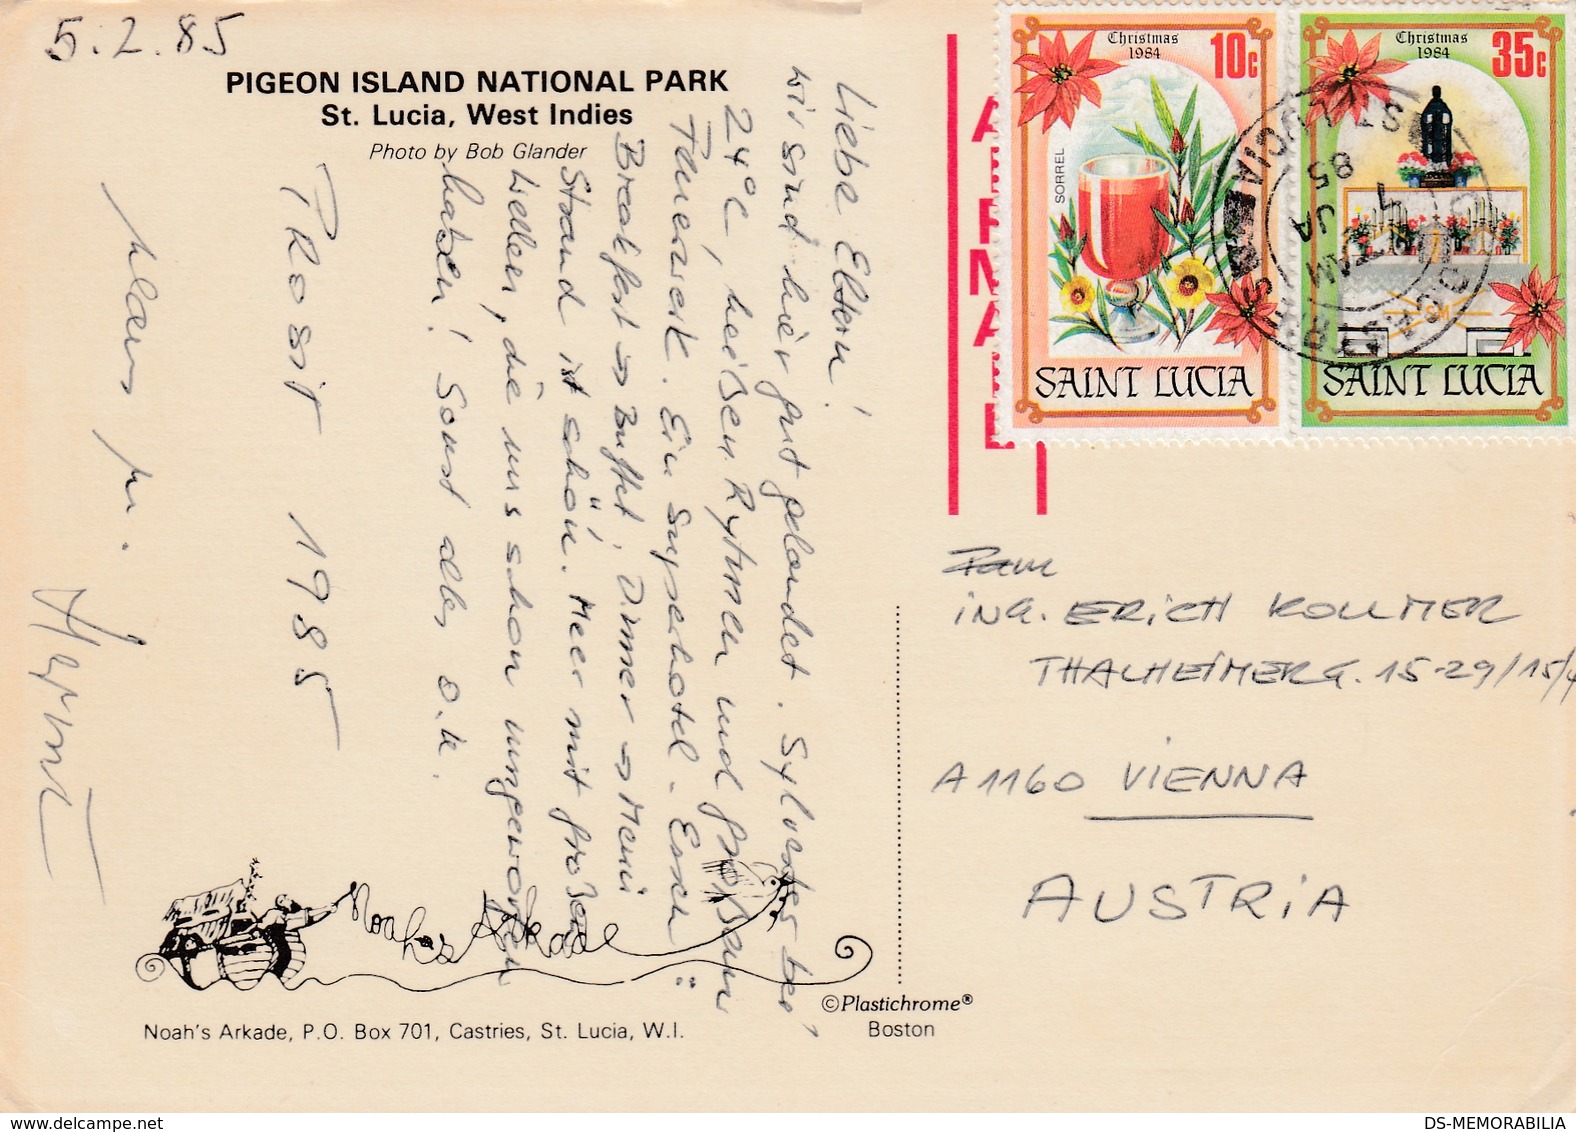 Santa Lucia - Pigeon Island National Prk 1985 Nice Stamps - Sainte-Lucie